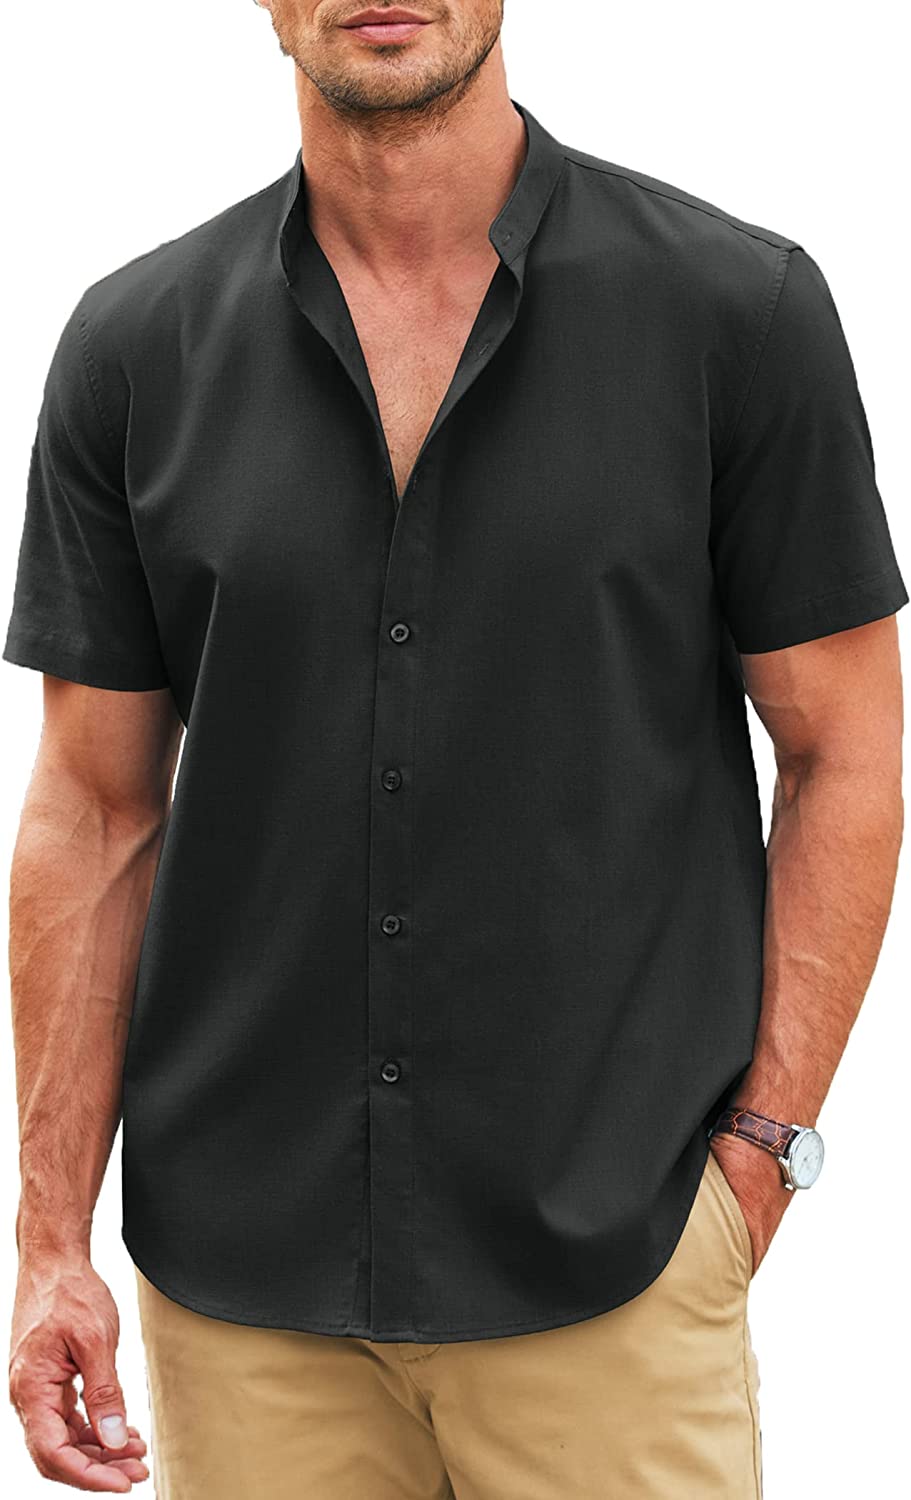 COOFANDY Men's Casual Linen Shirt Band Collar Short Sleeve Button